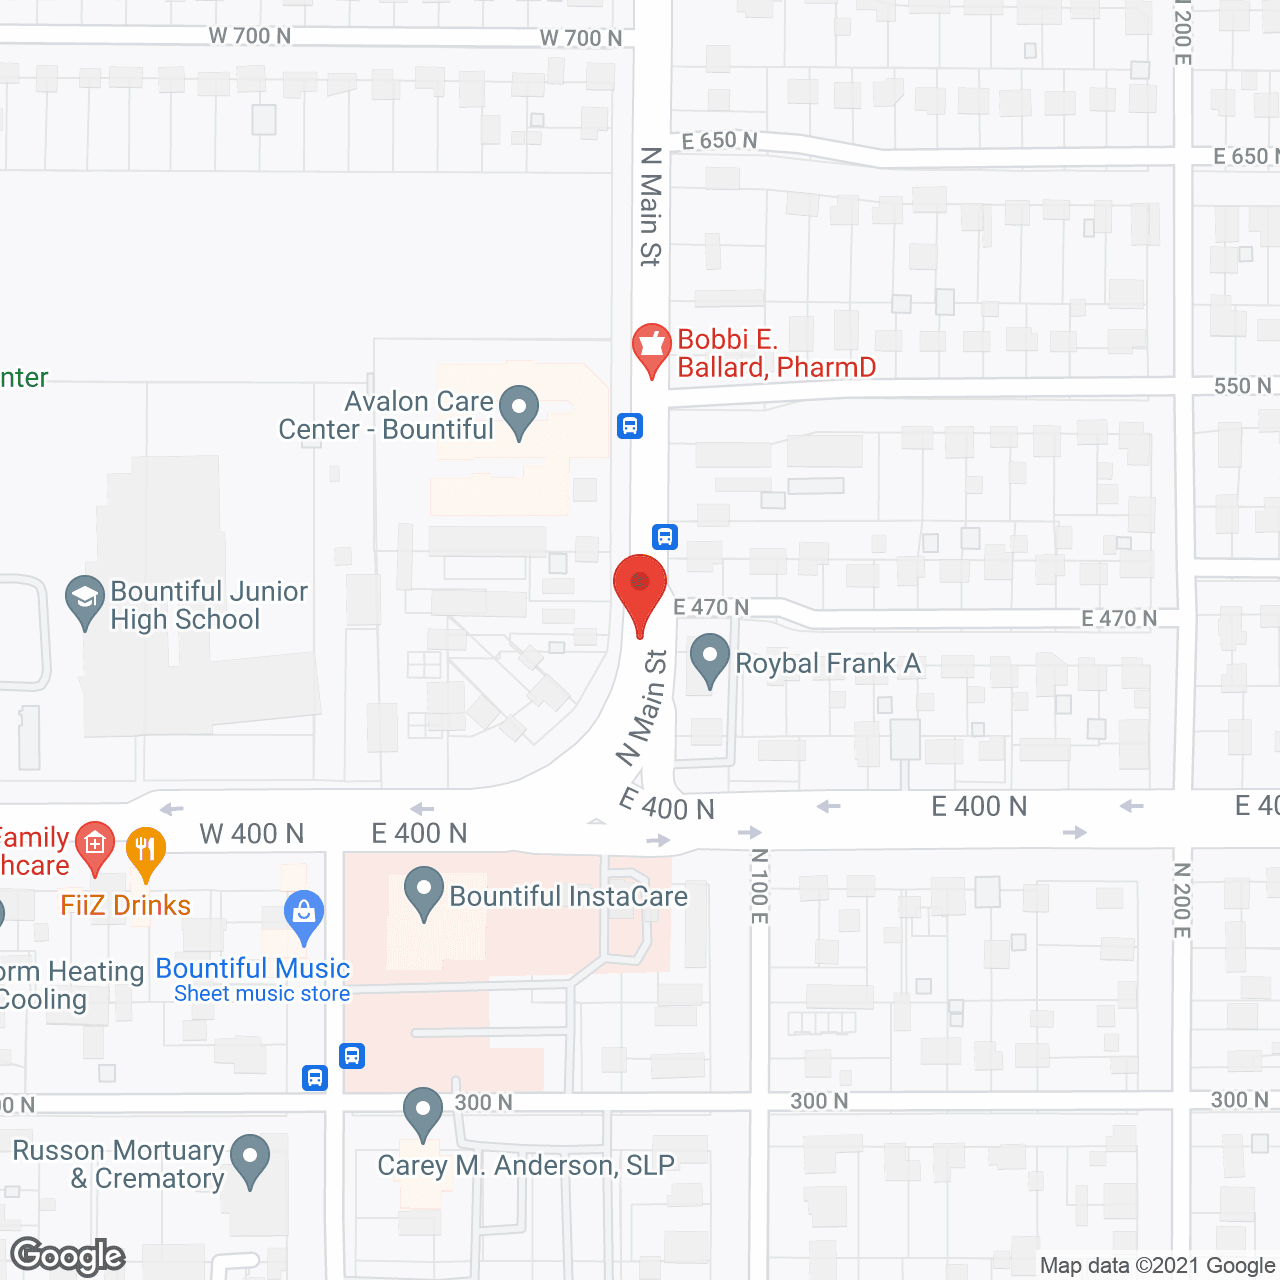 Avalon Care Center- Bountiful in google map